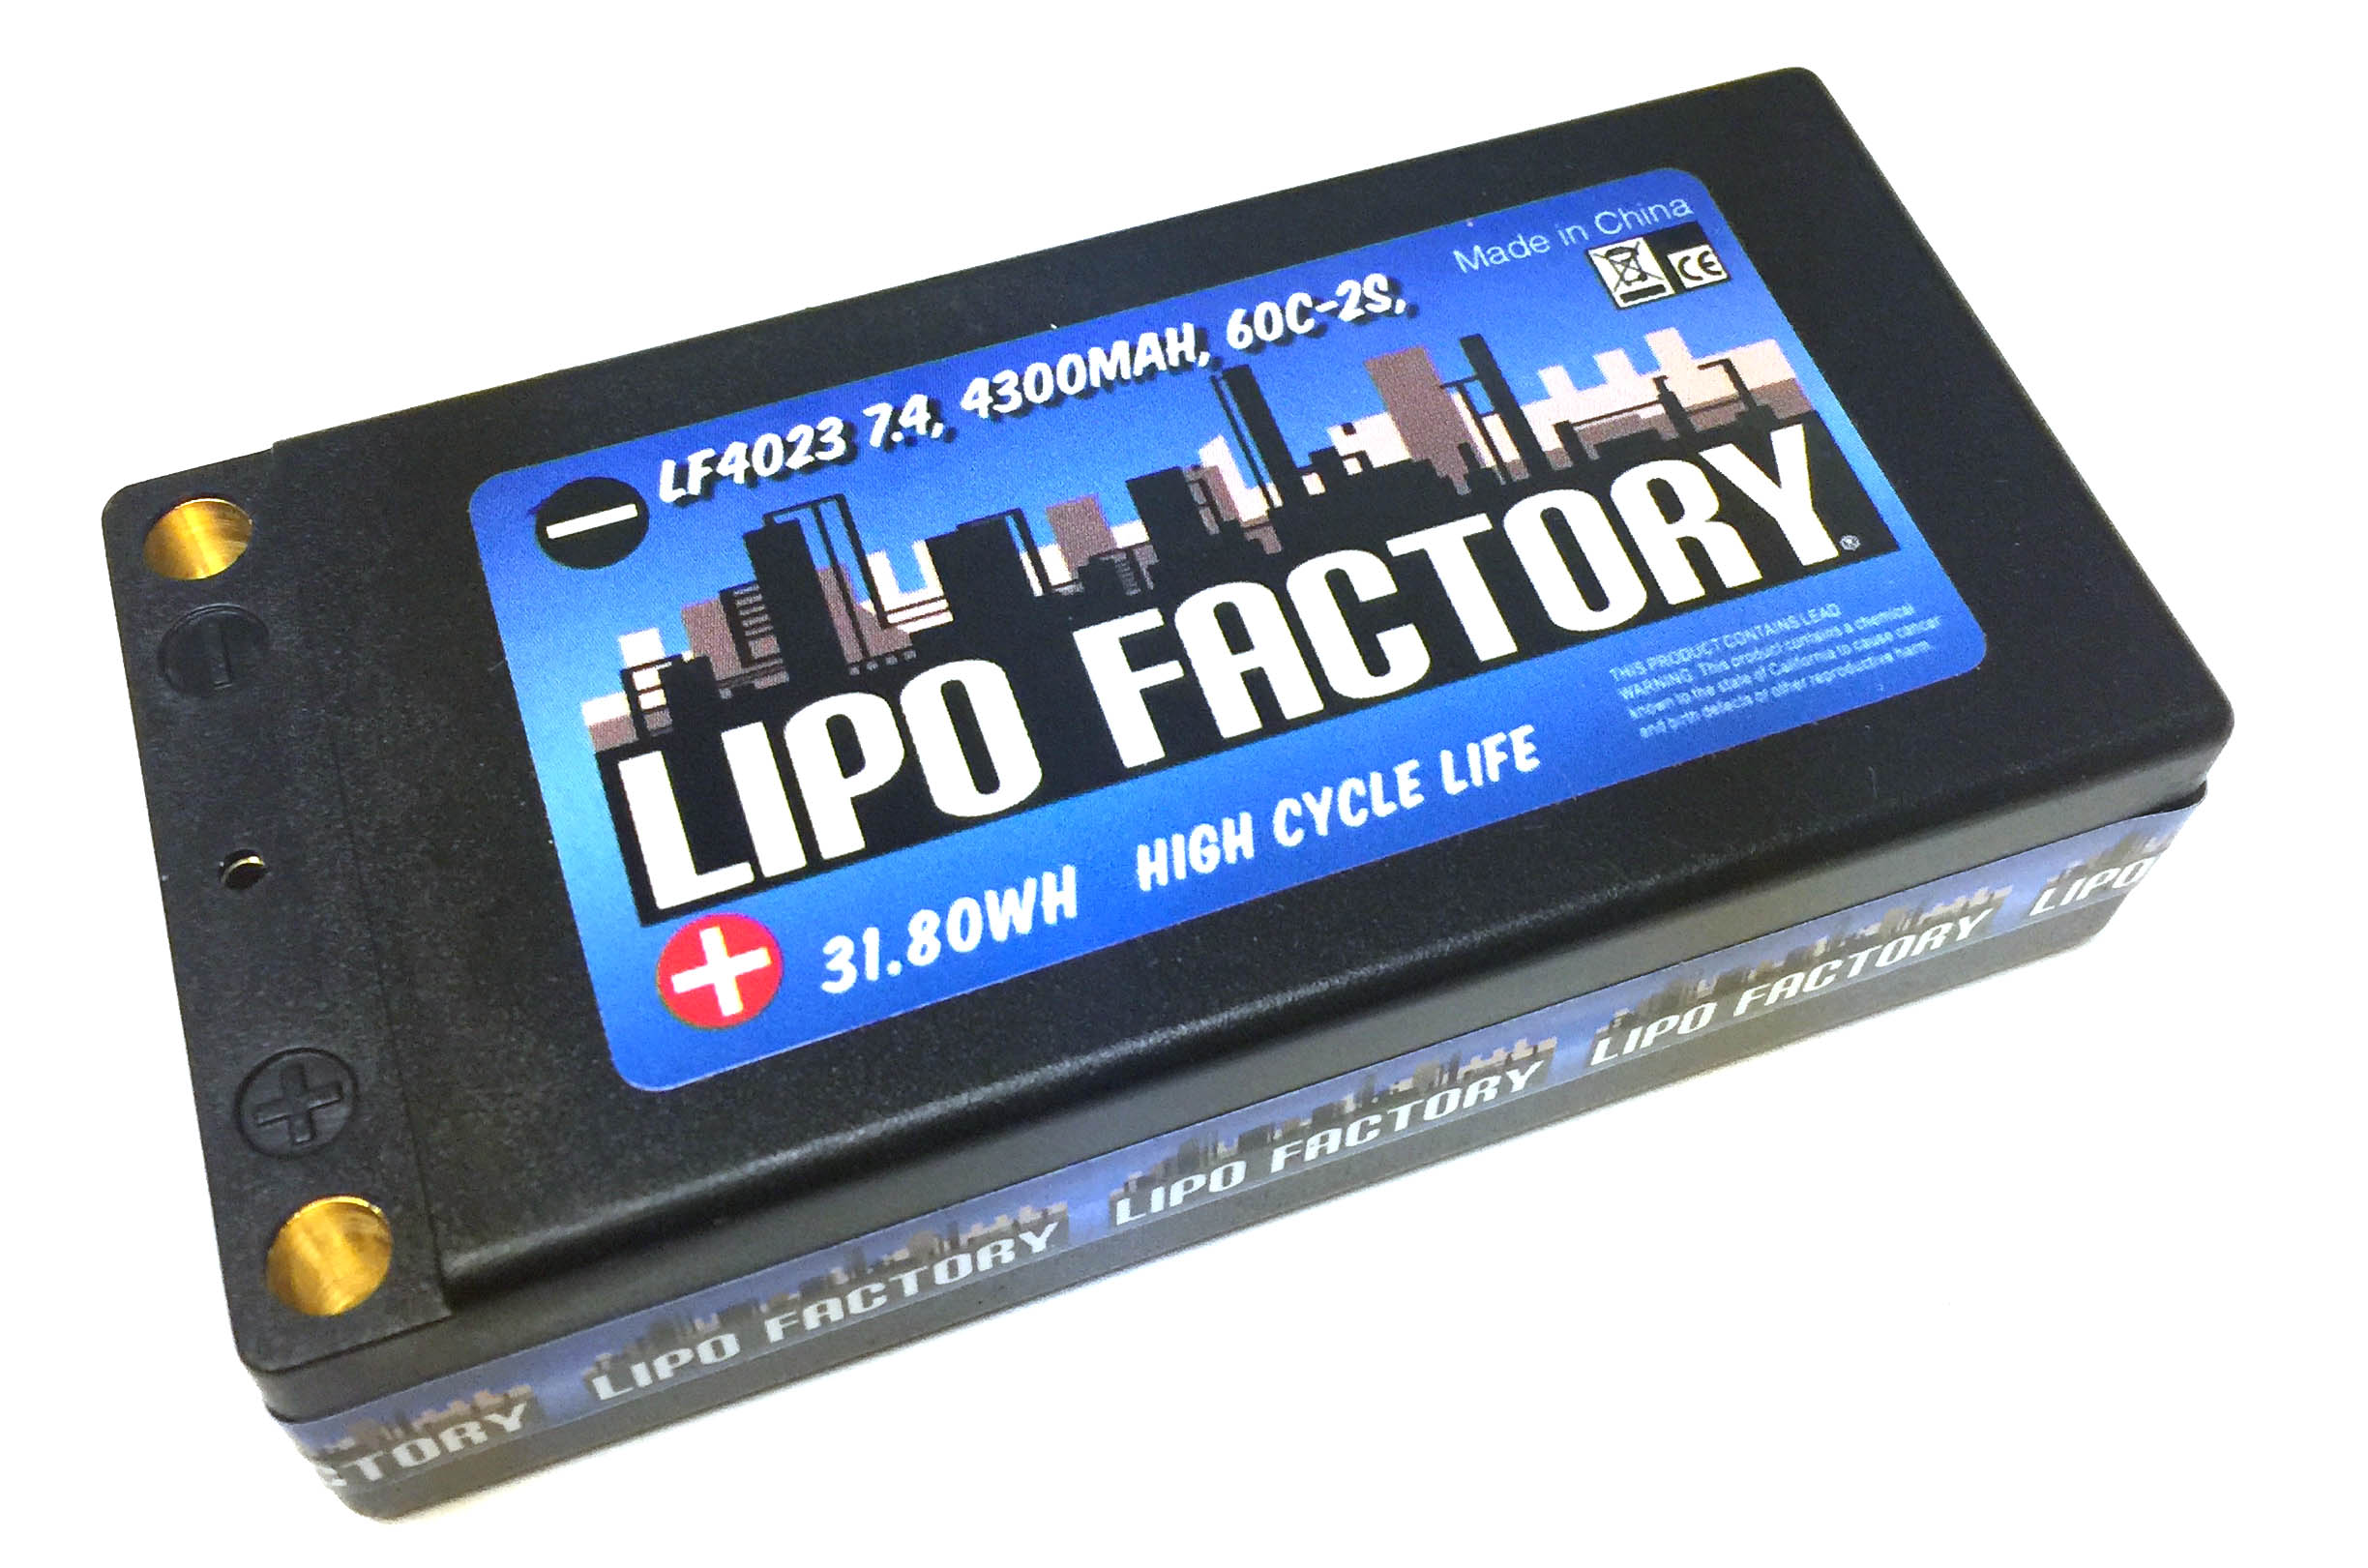 Lipo-Factoryobe[i7.4V 4300mah 60Cj 5mmoii :V[eB[P[X